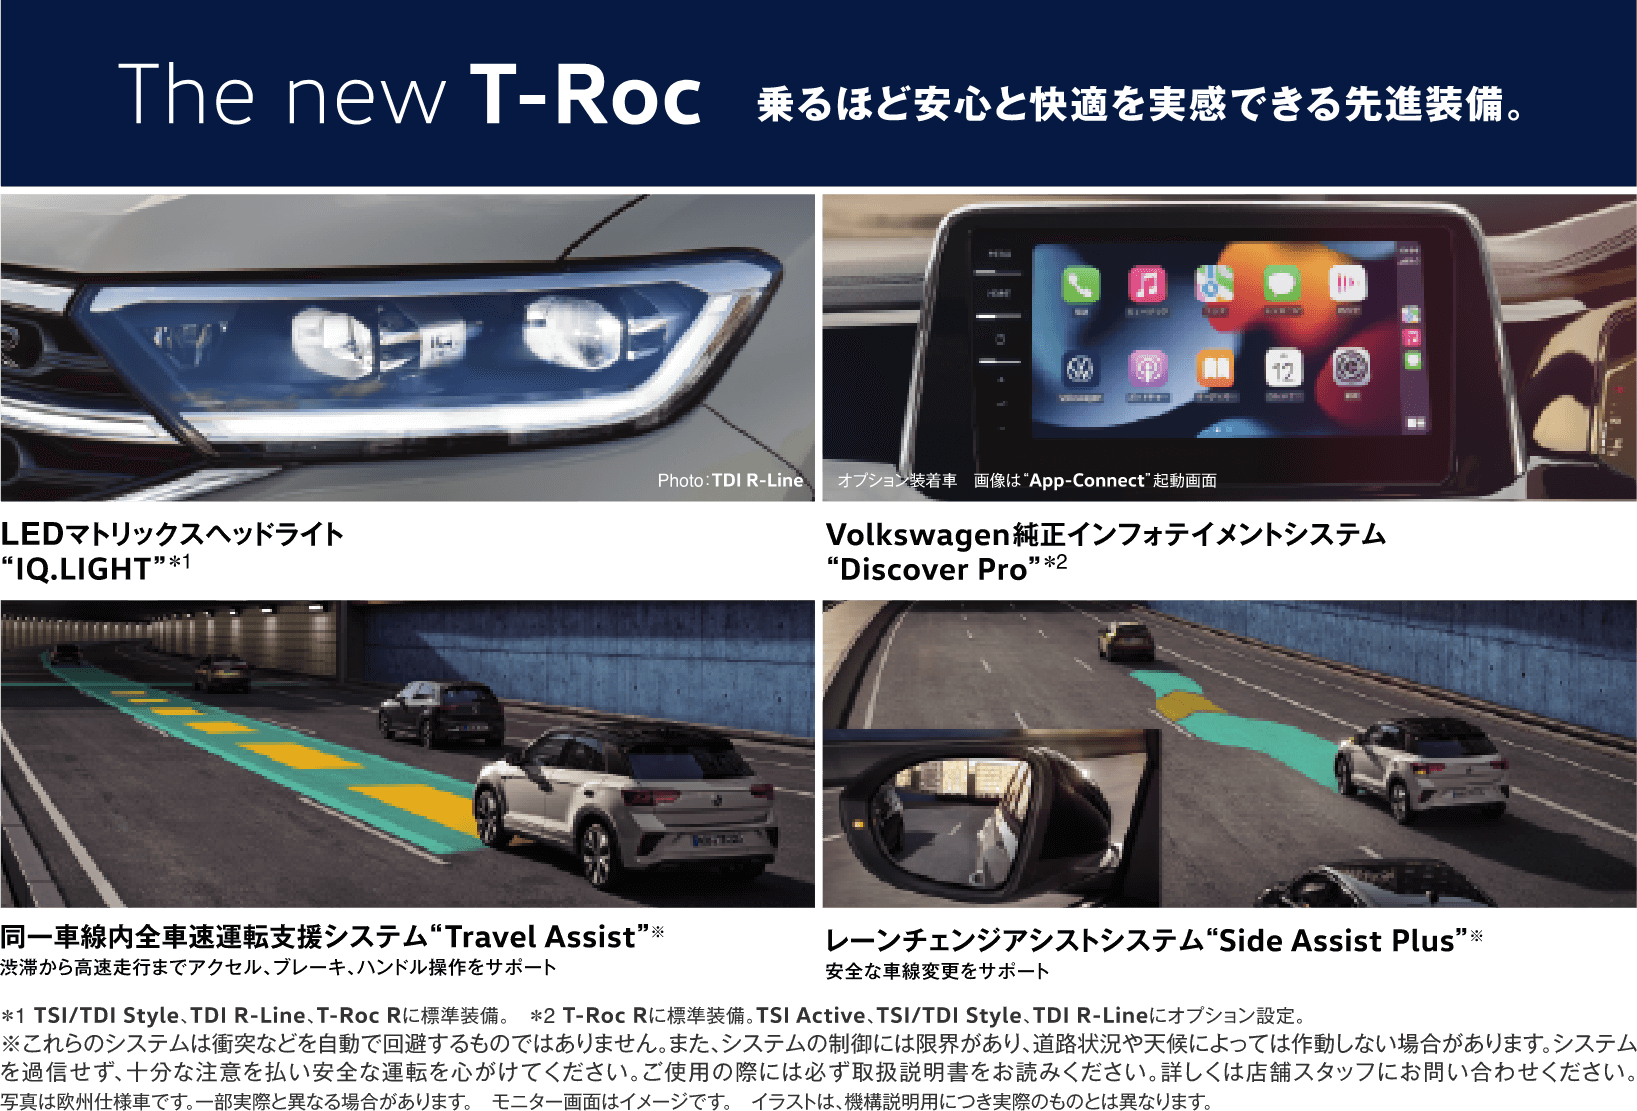 The New T-Roc